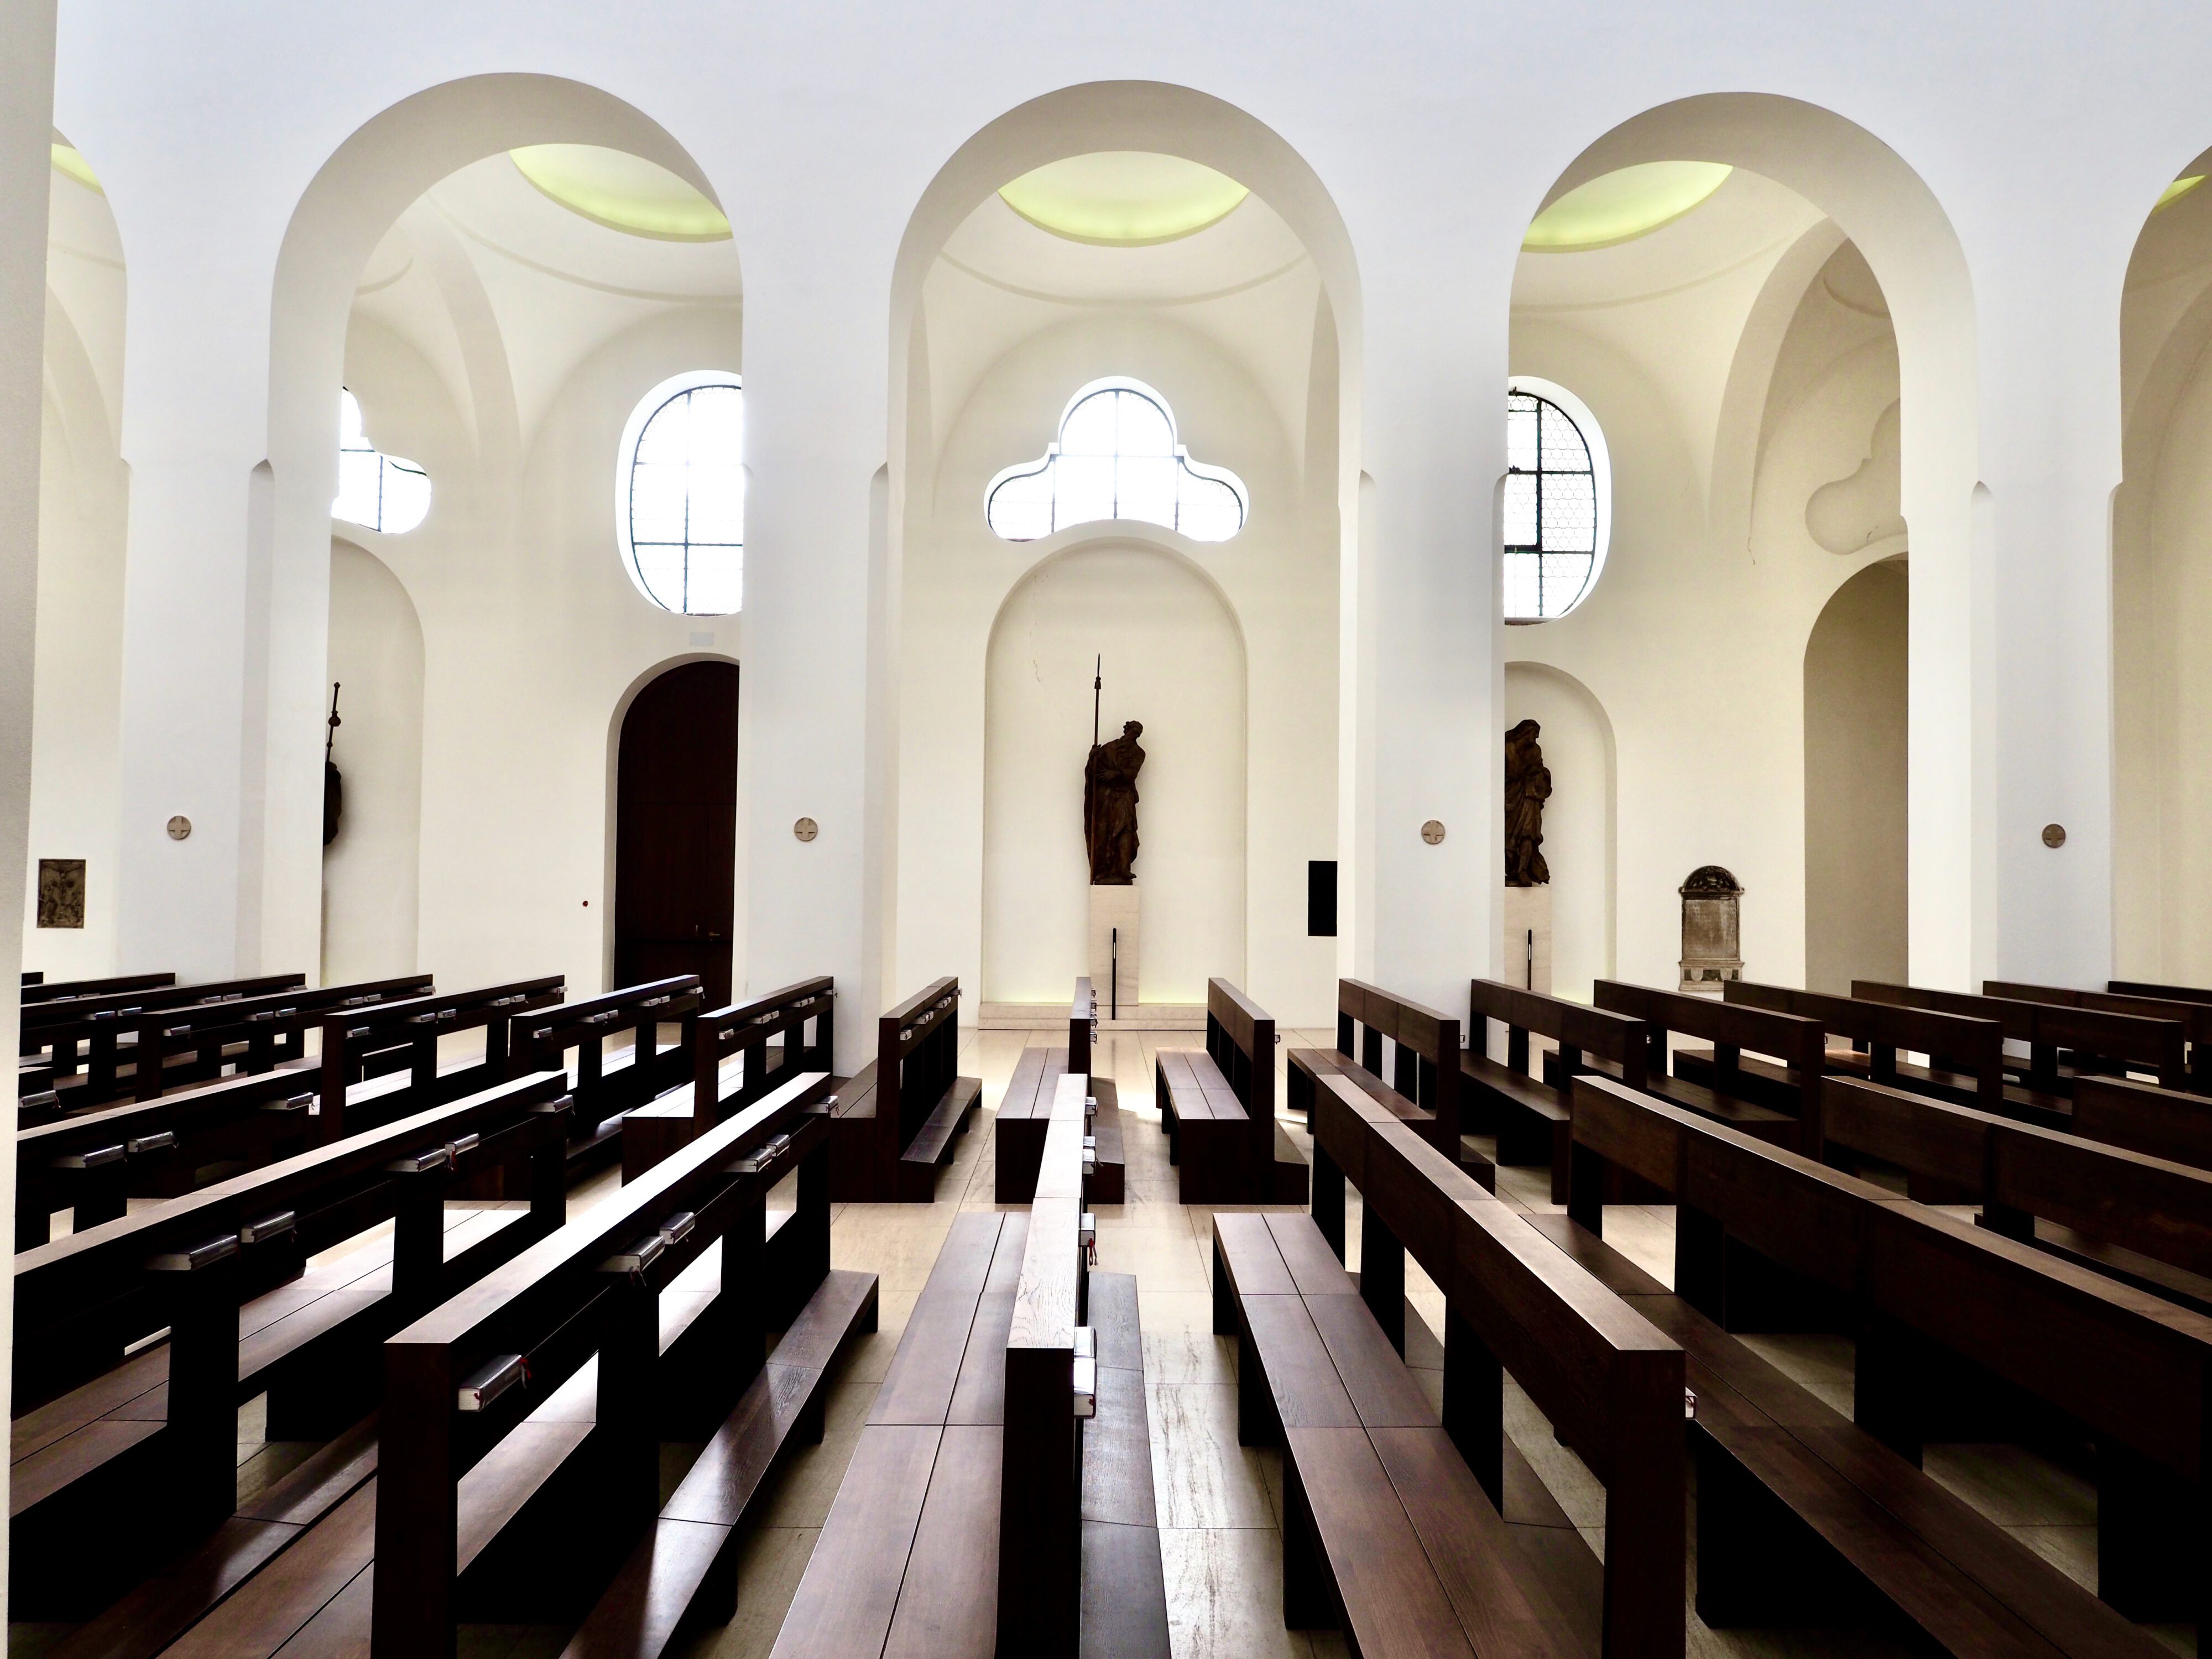 interior of the St. Moritz Church in Augsburg